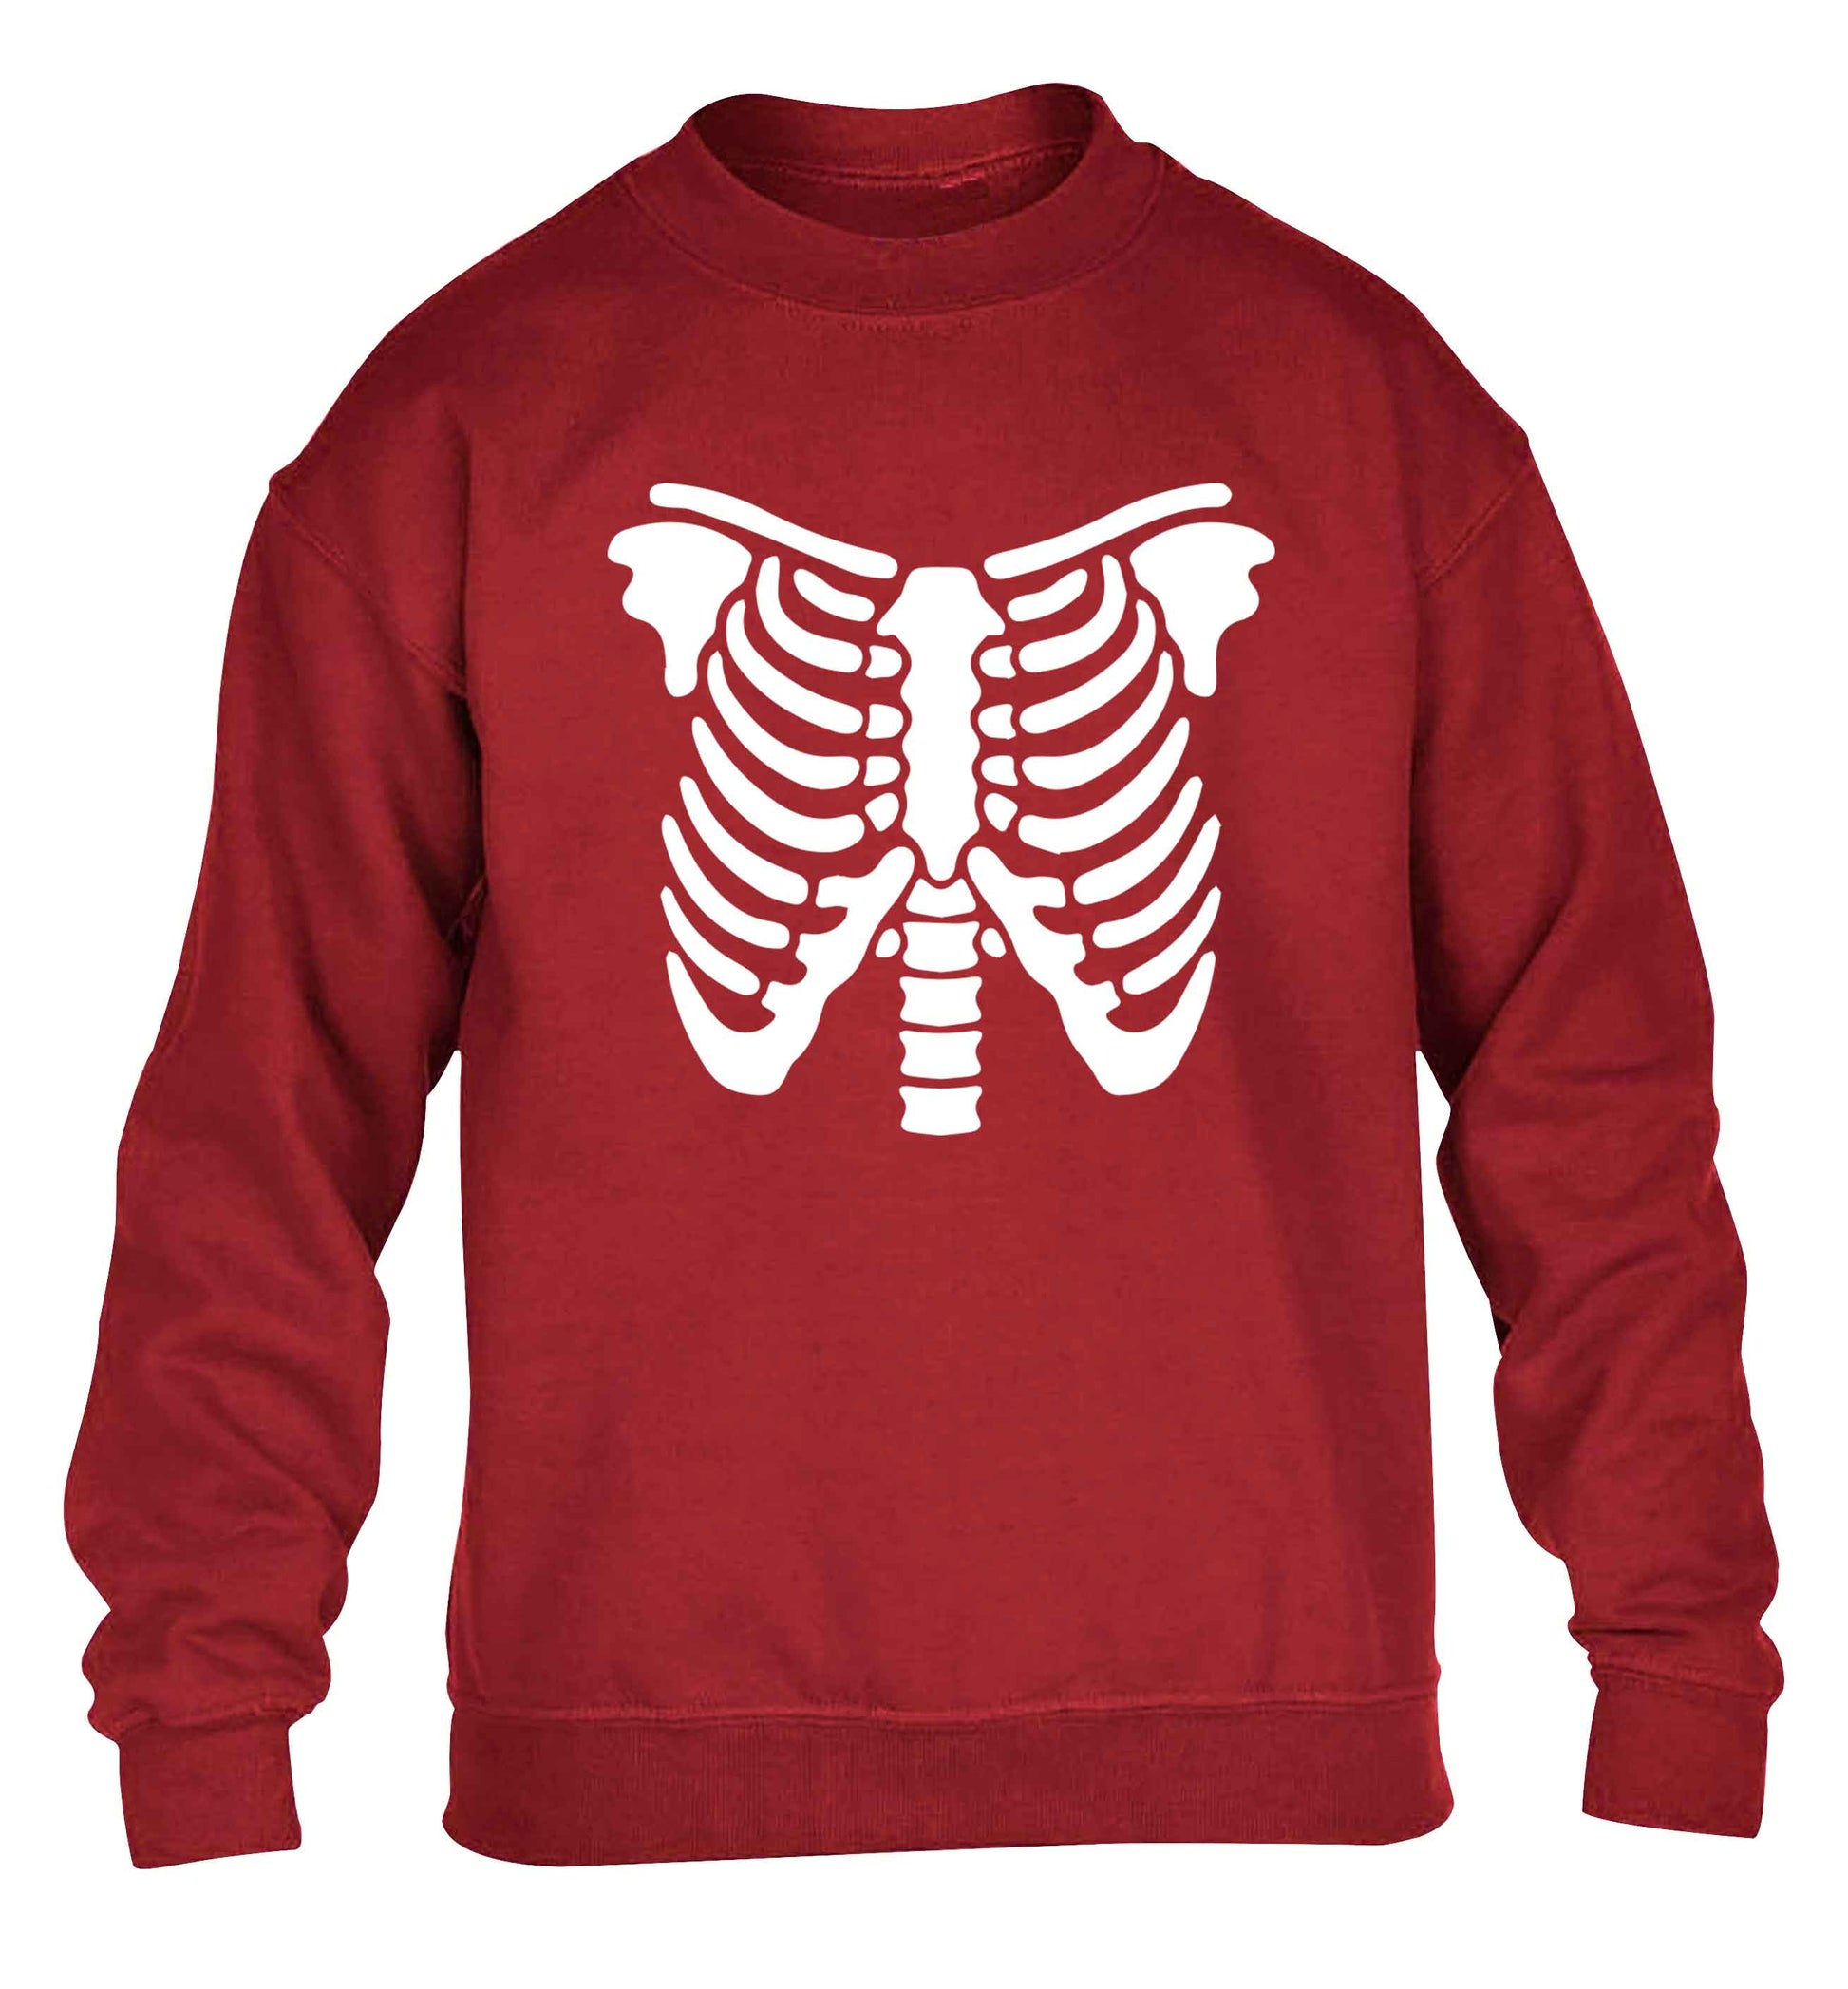 Skeleton ribcage children's grey sweater 12-13 Years